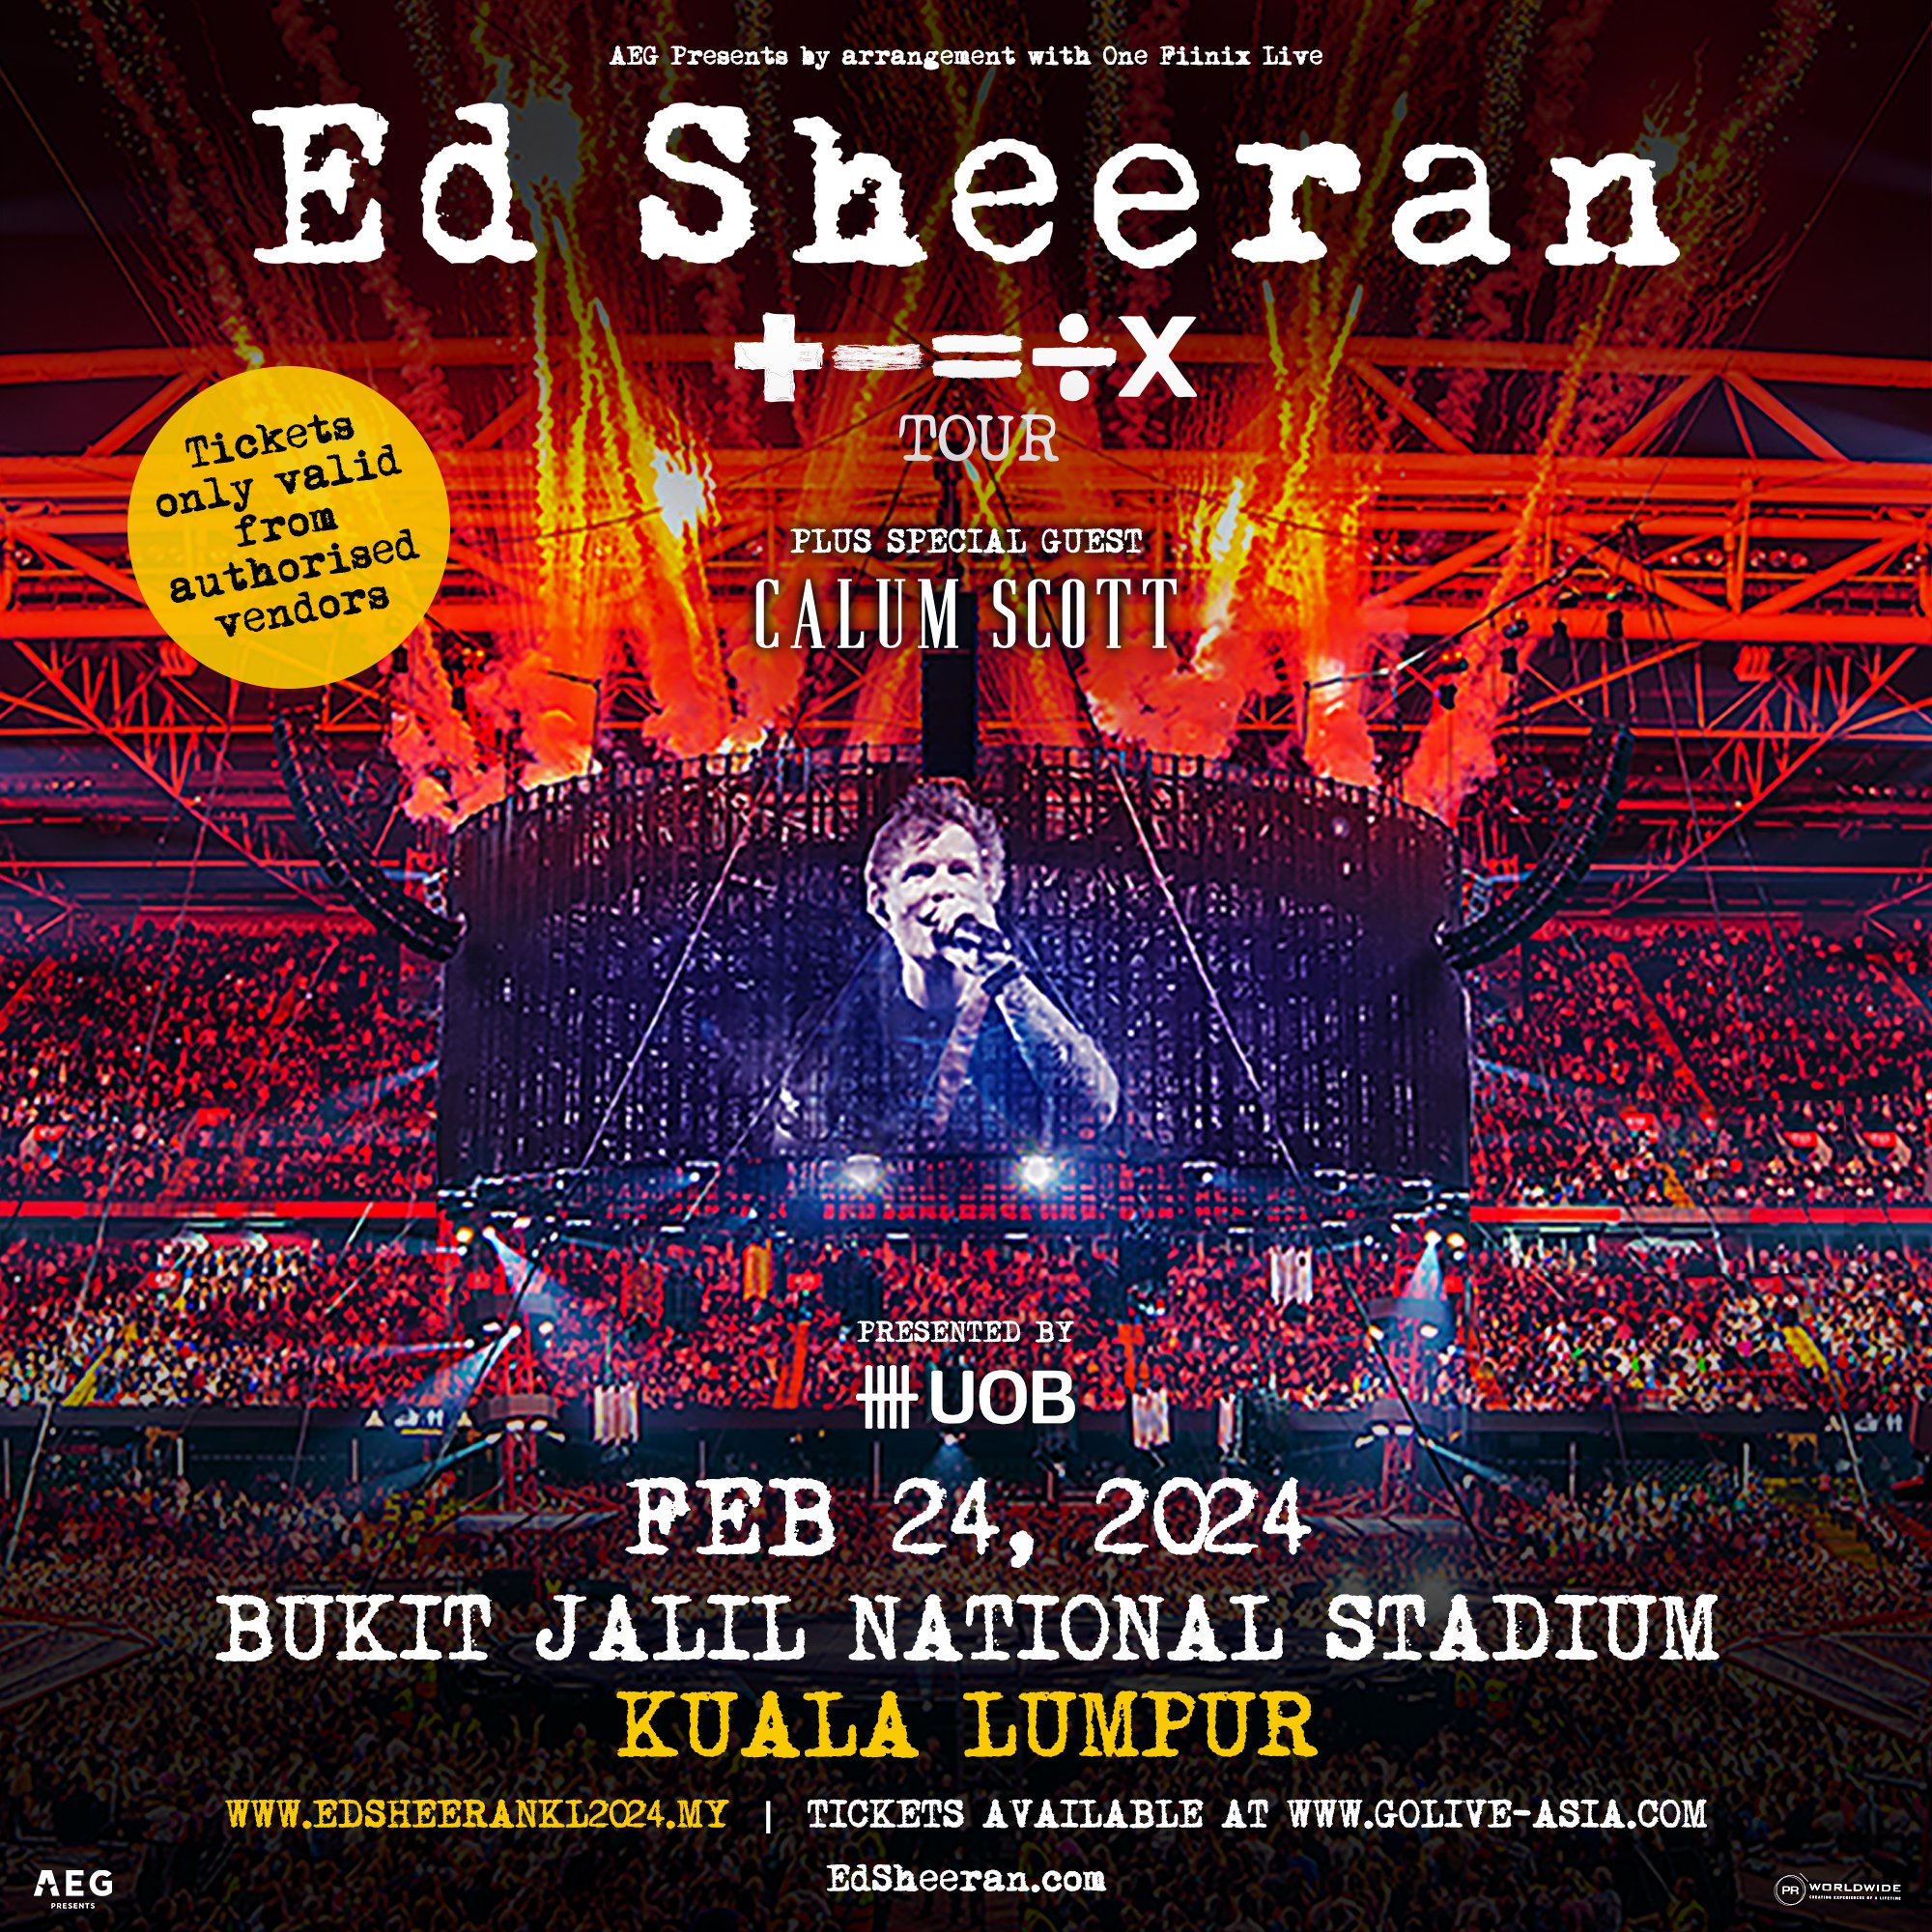 Ed Sheeran + – = ÷ x Tour Kuala Lumpur (Tickets)